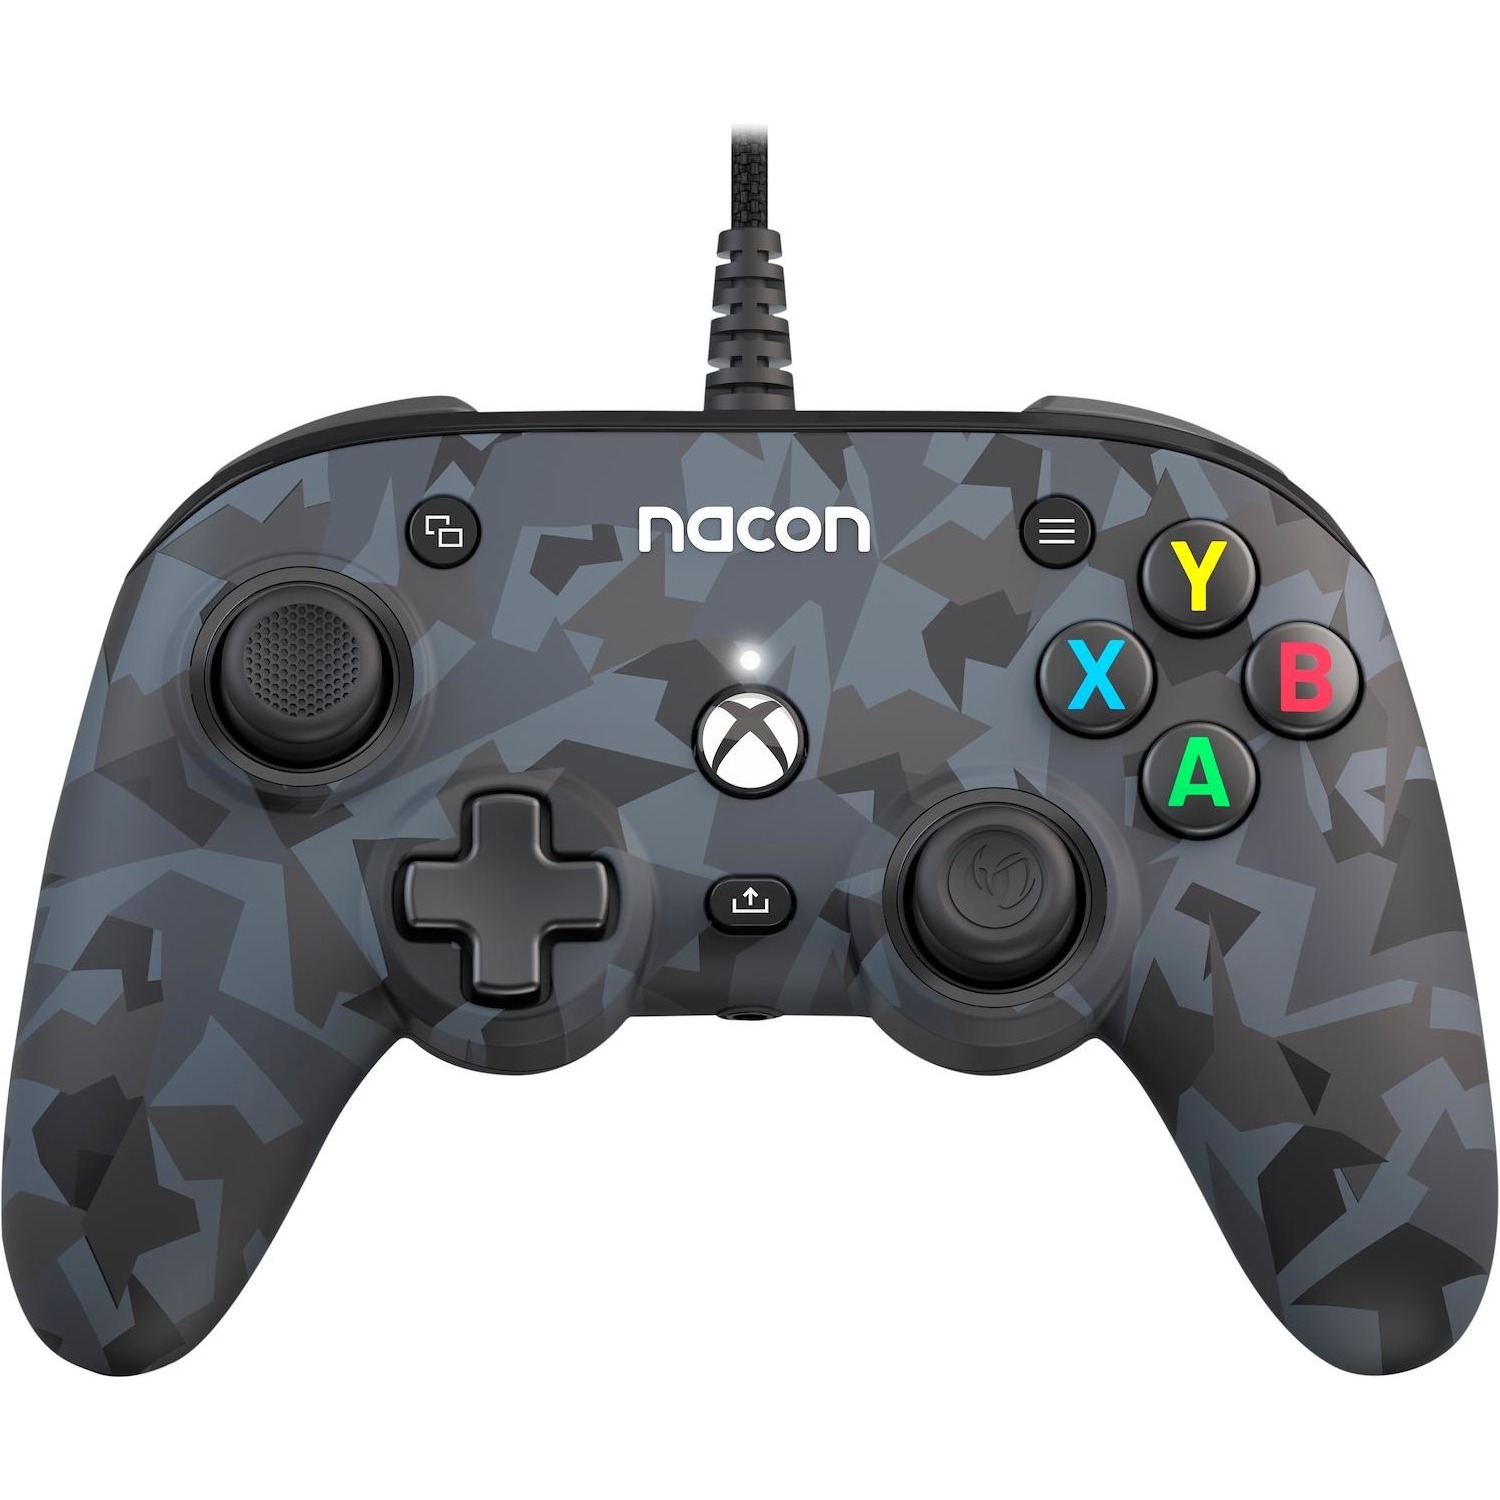 Immagine per Nacon XBOX Pro Compact Controller Camo Grey Wired controller gaming da DIMOStore